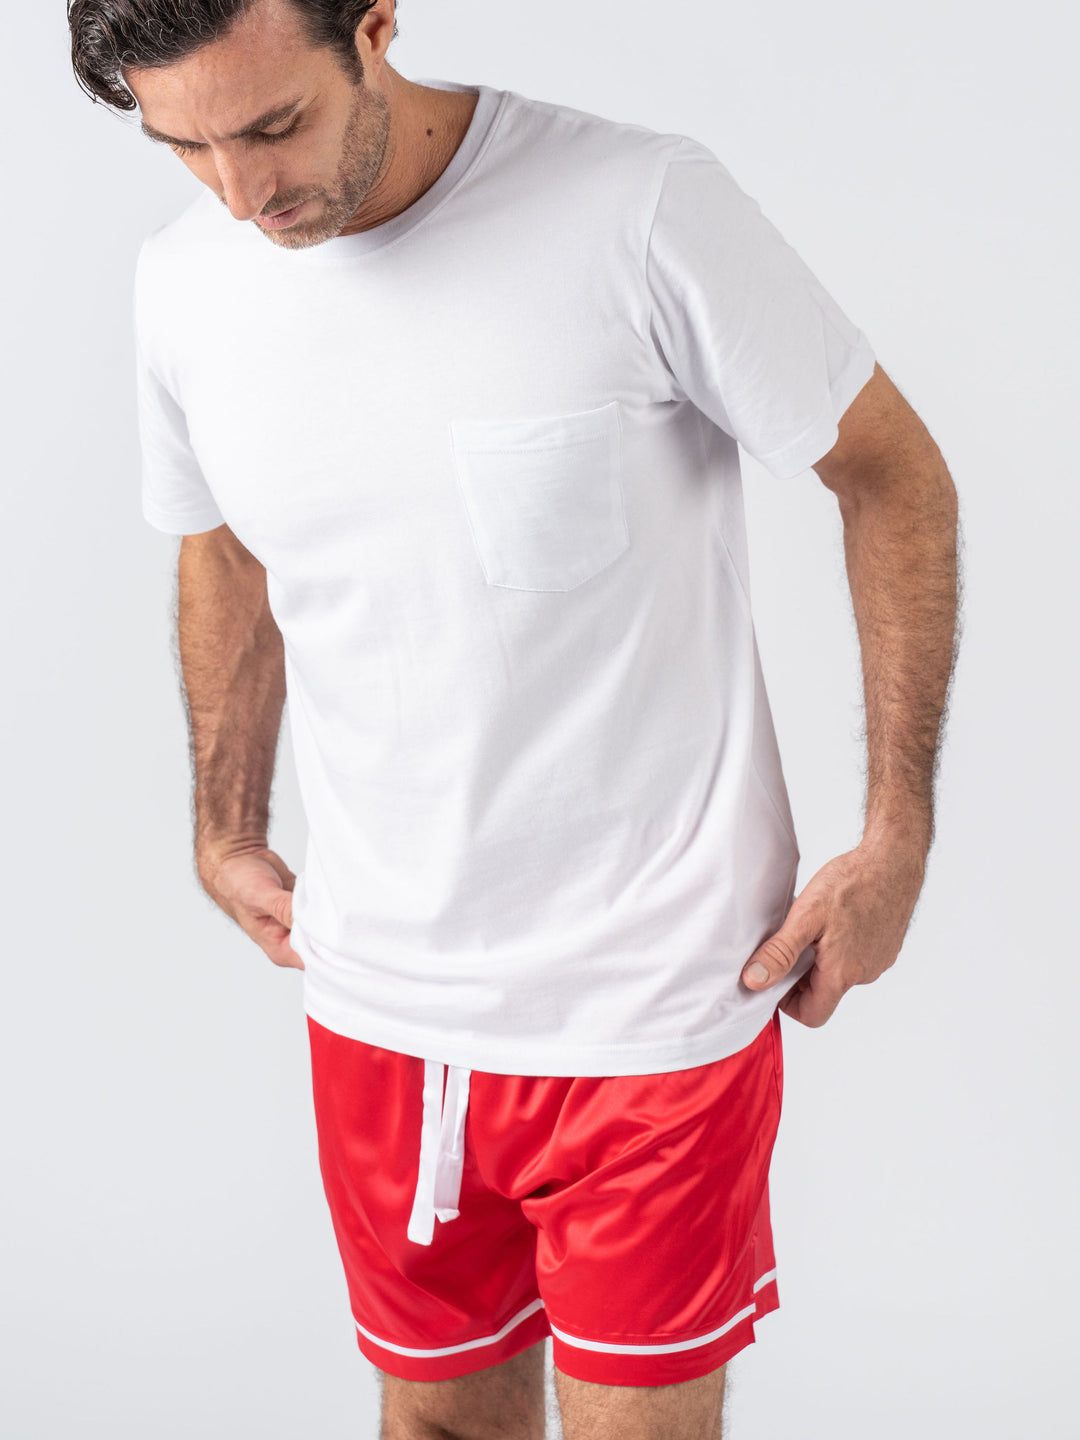 Men's Satin Personalised Pyjama Set - Cotton Shirt with Red Shorts